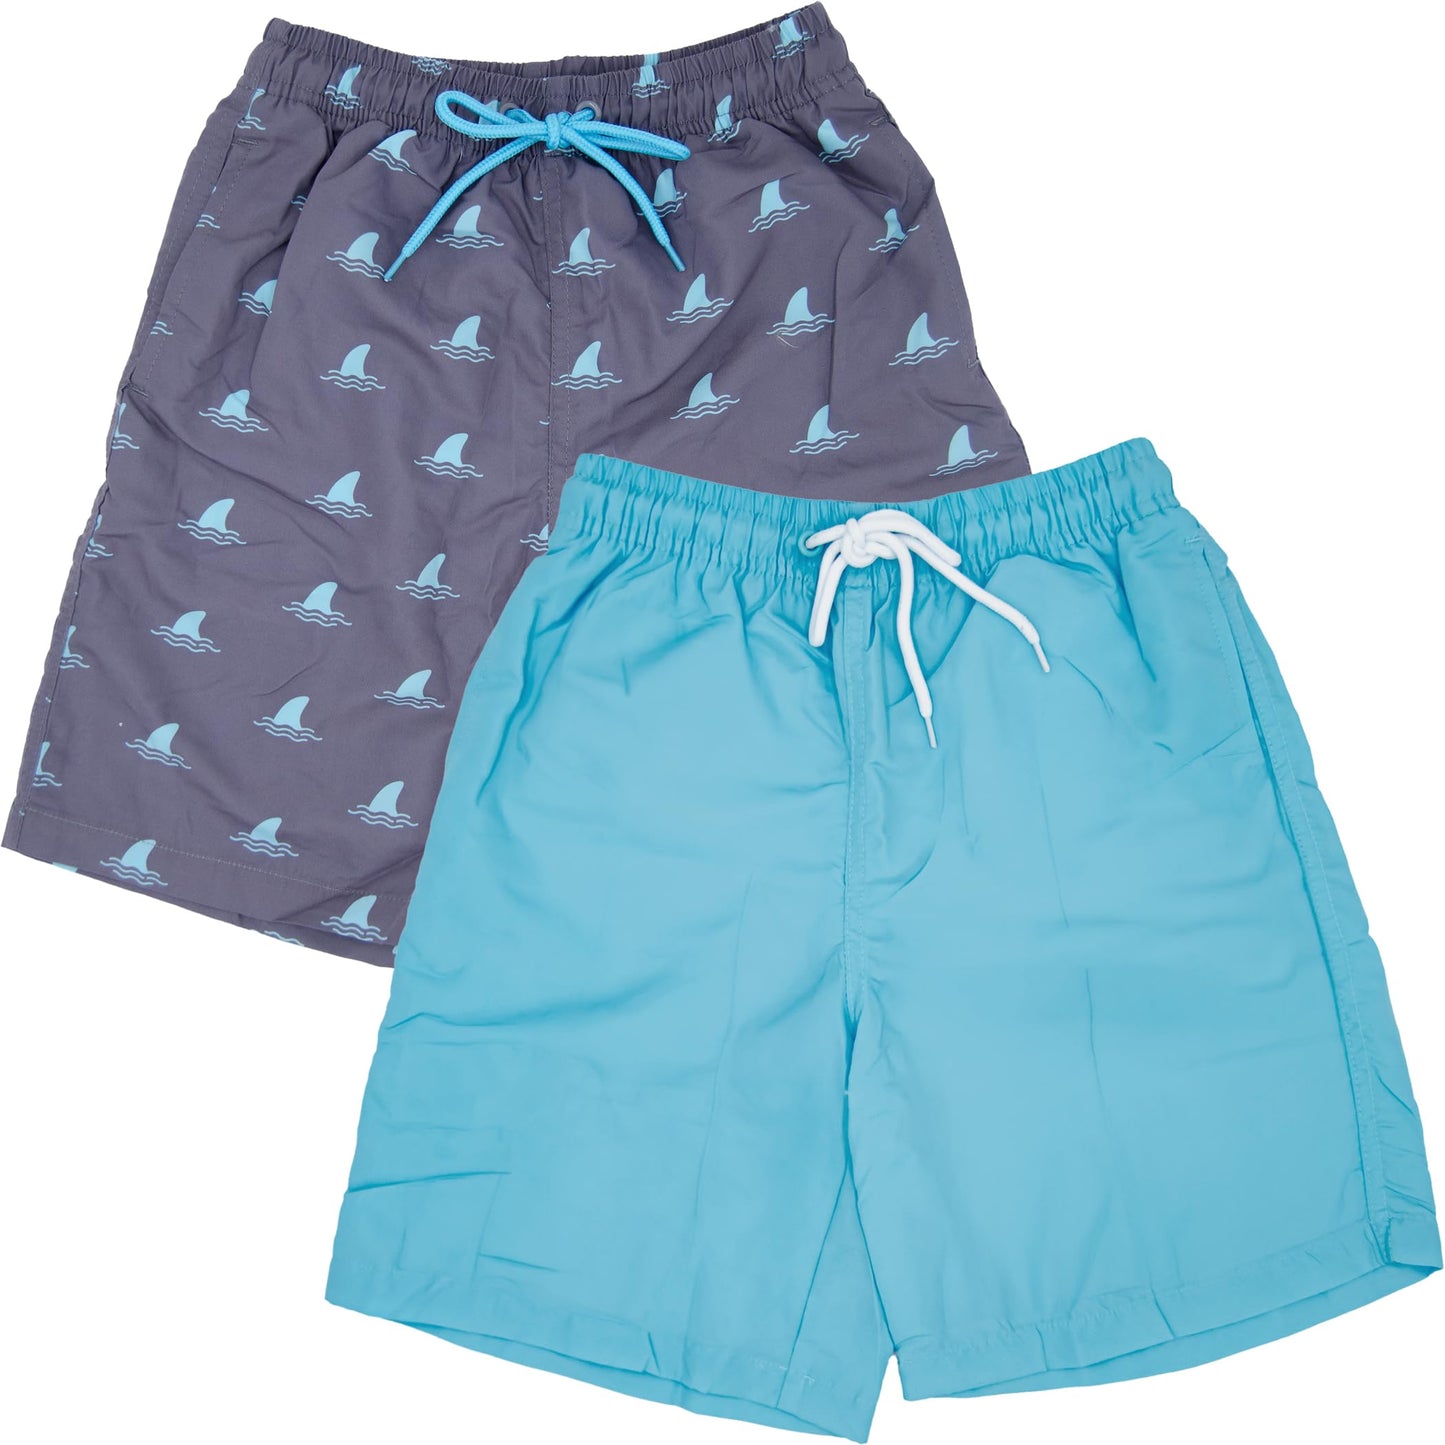 BROOKLYN VERTICAL Boys 2-Pack Swim Trunks Quick Dry Board Shorts for Pool Beach Summer